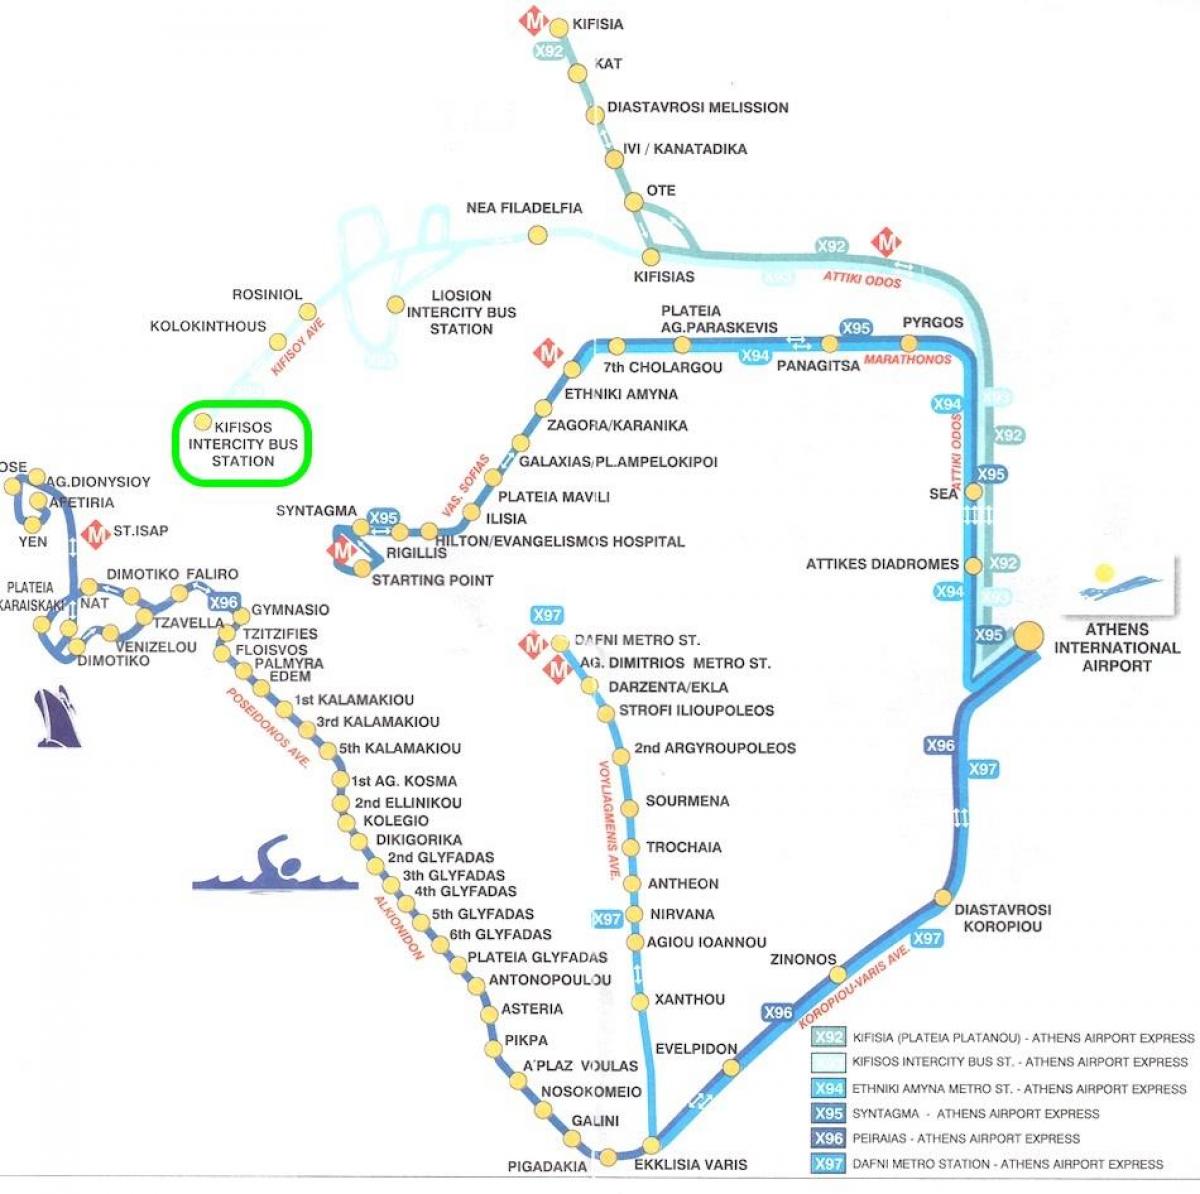 map of kifissos bus station